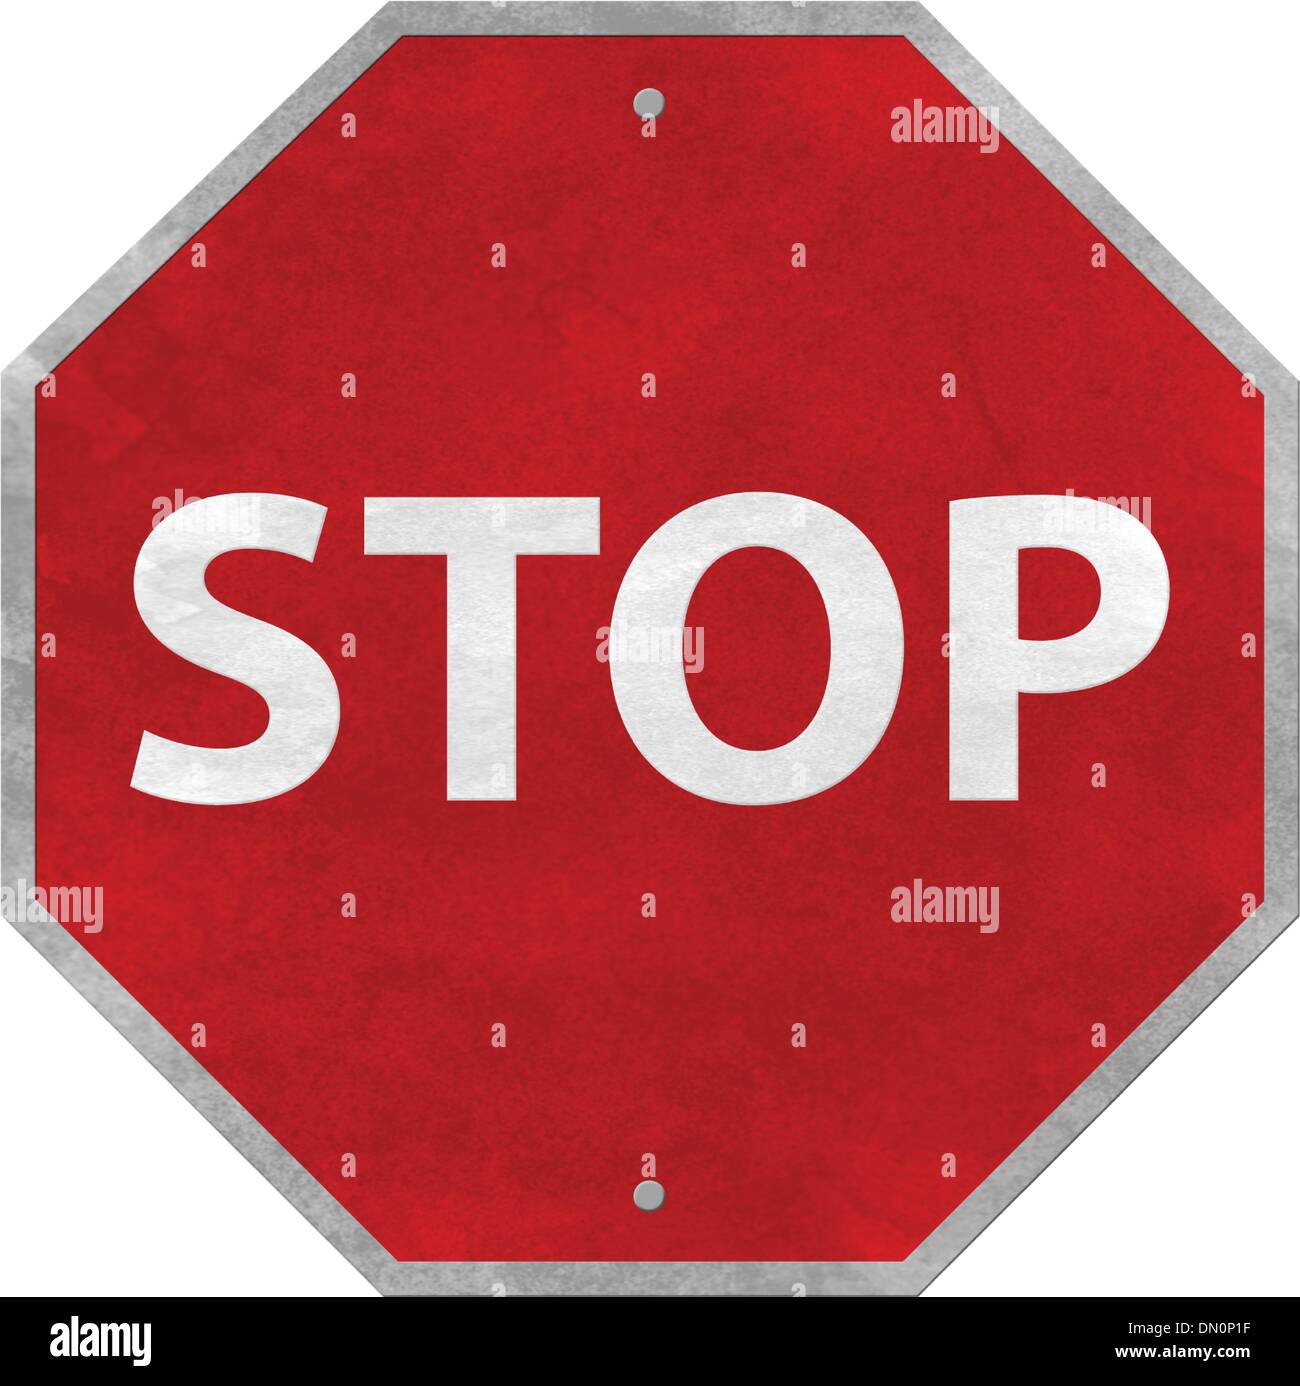 Stop label signage -Fotos und -Bildmaterial in hoher Auflösung – Alamy